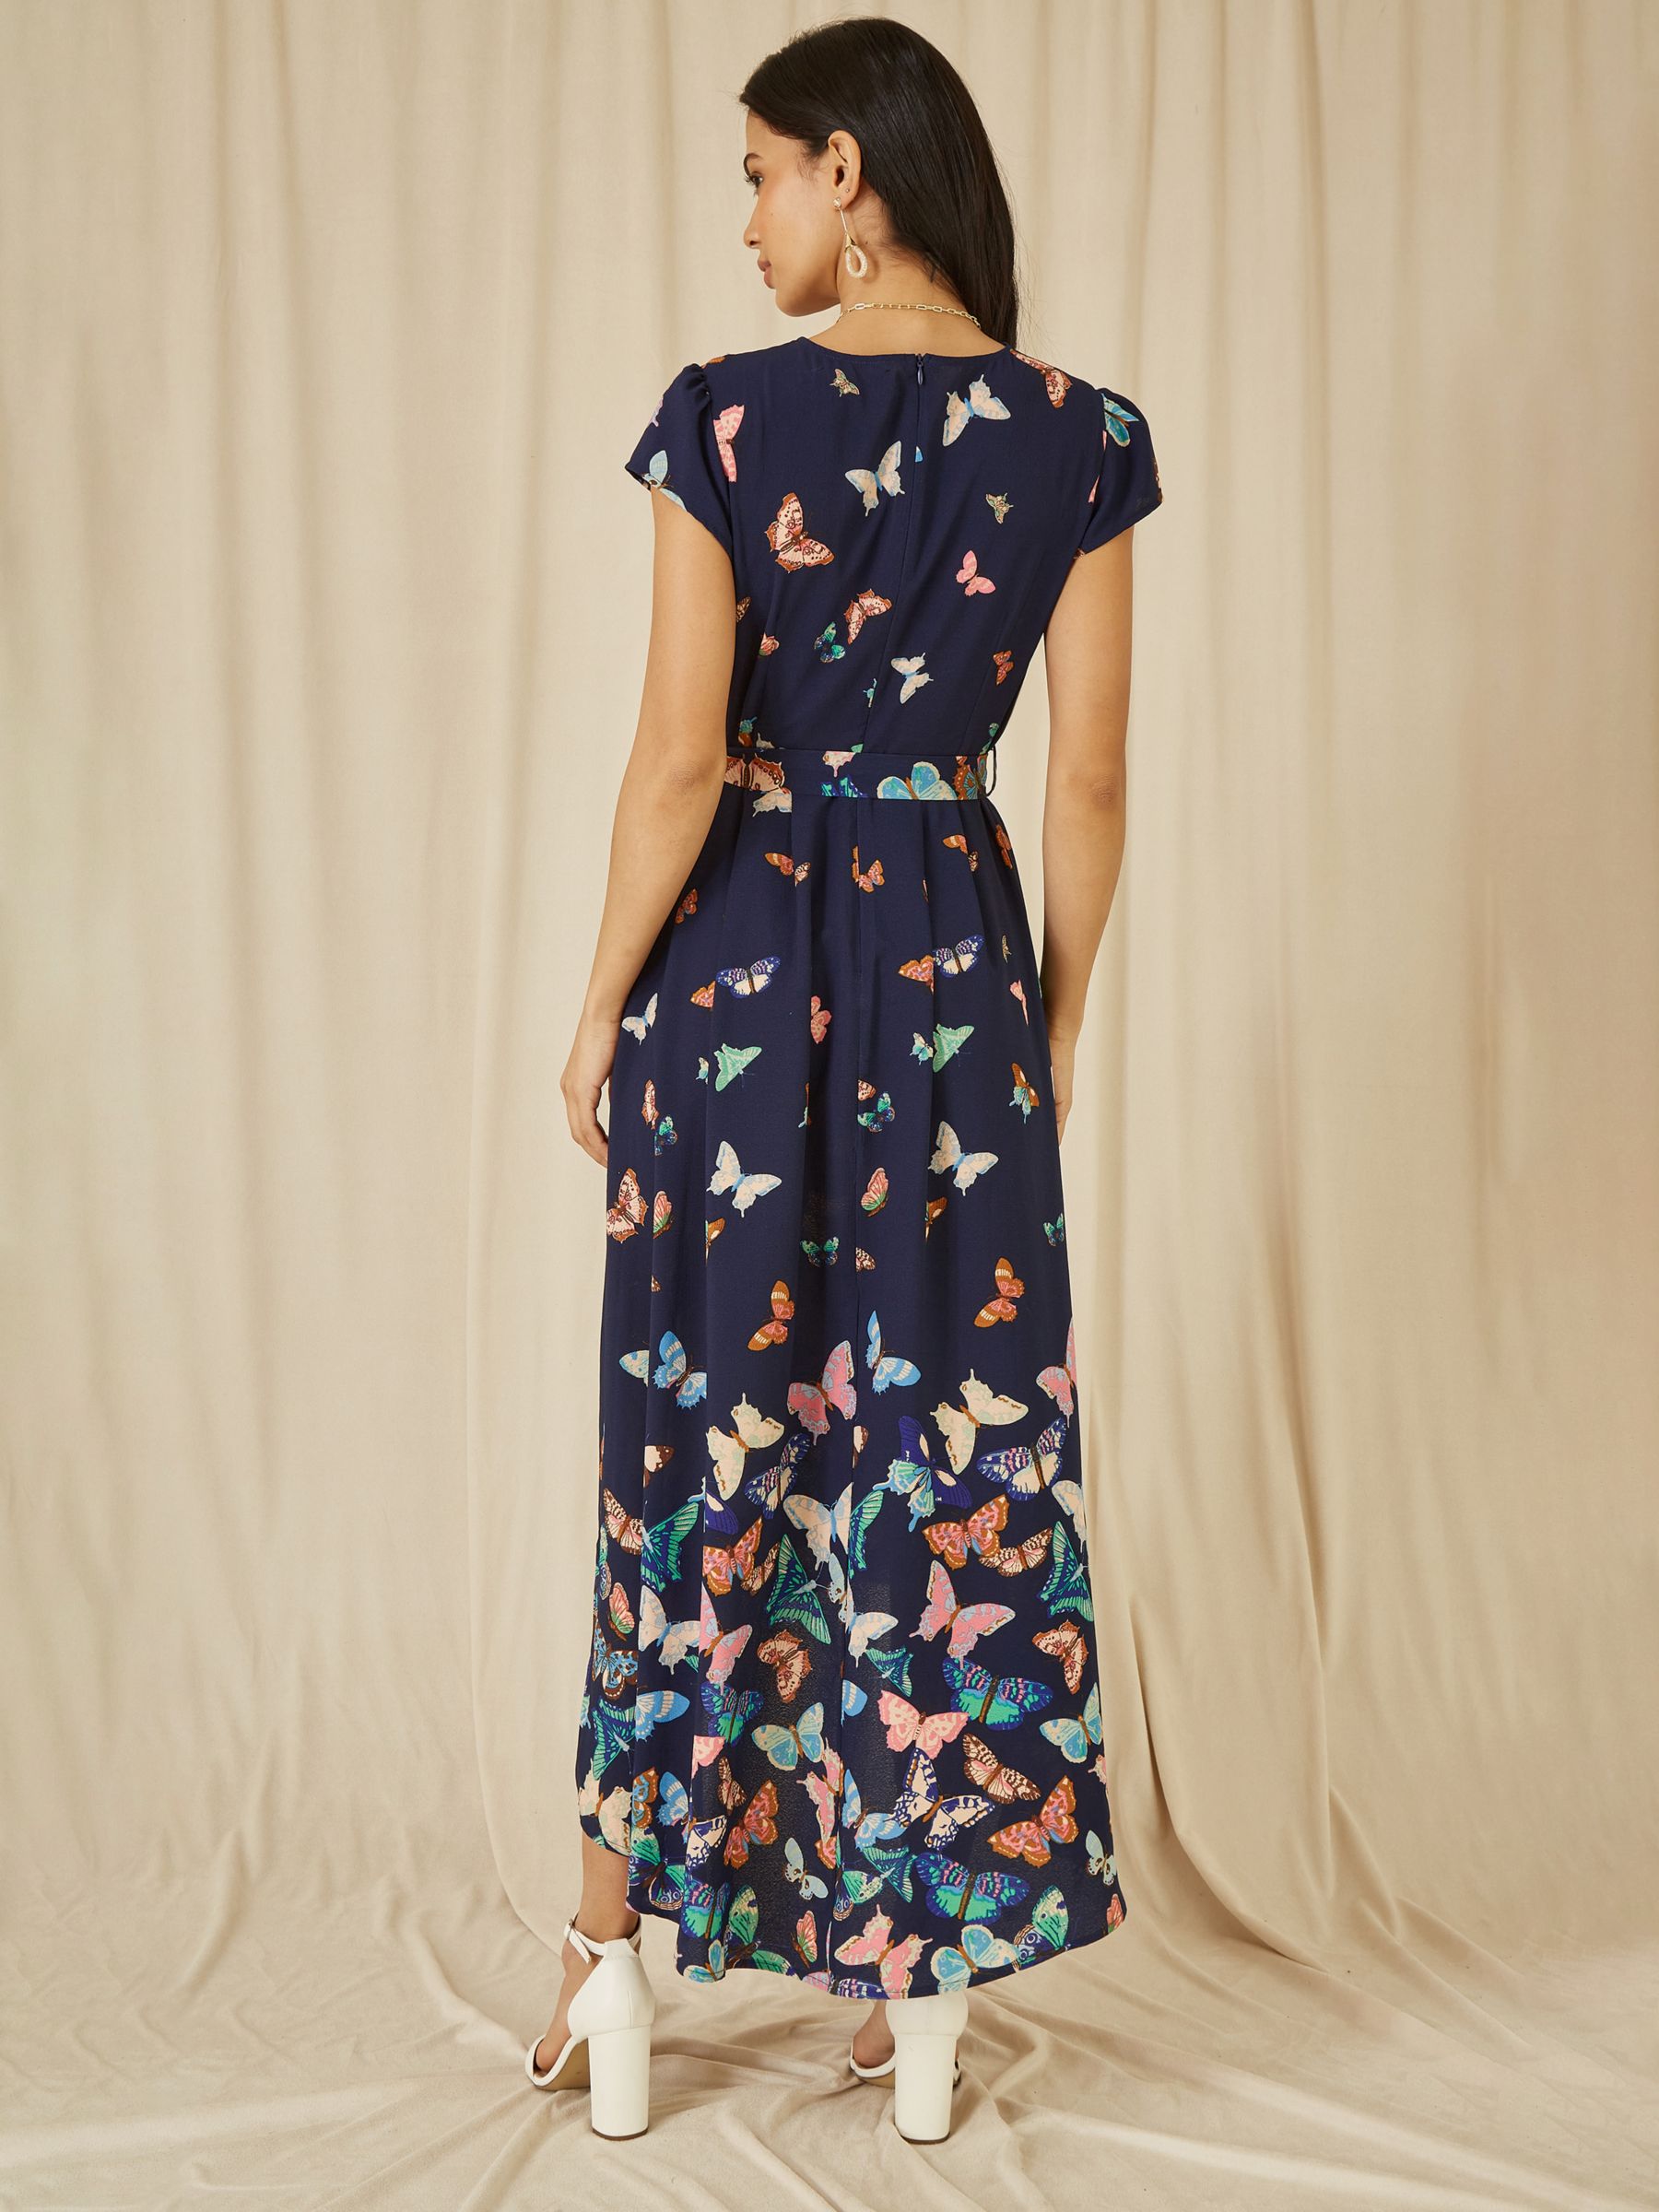 Mela London Butterfly Print Wrap Midi Dress, Navy, 8